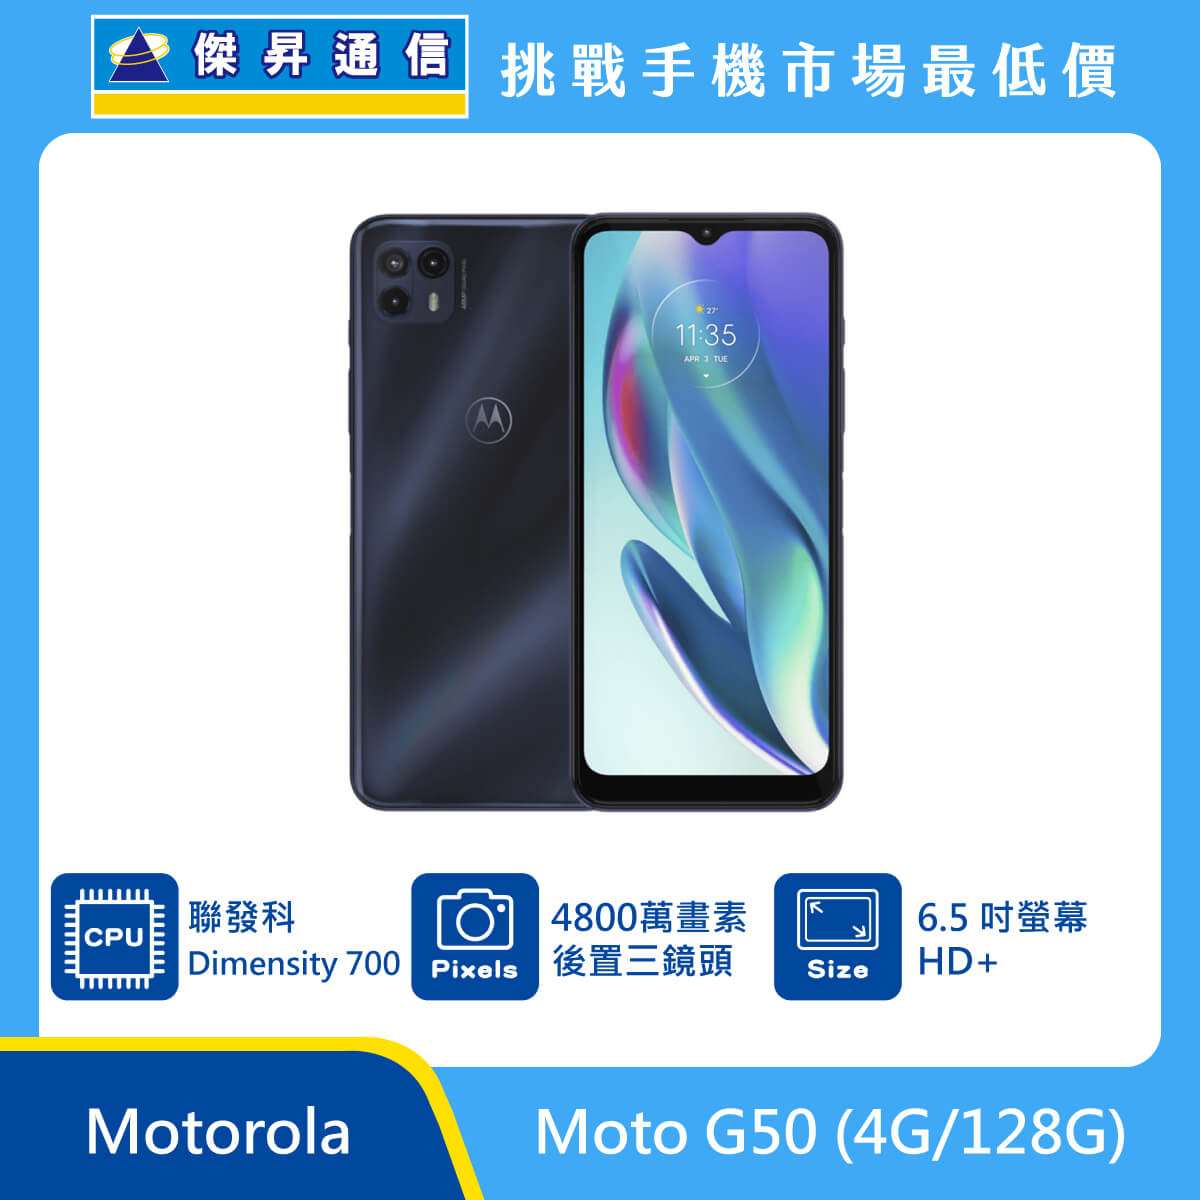 Motorola Moto G50 (4G/128G)